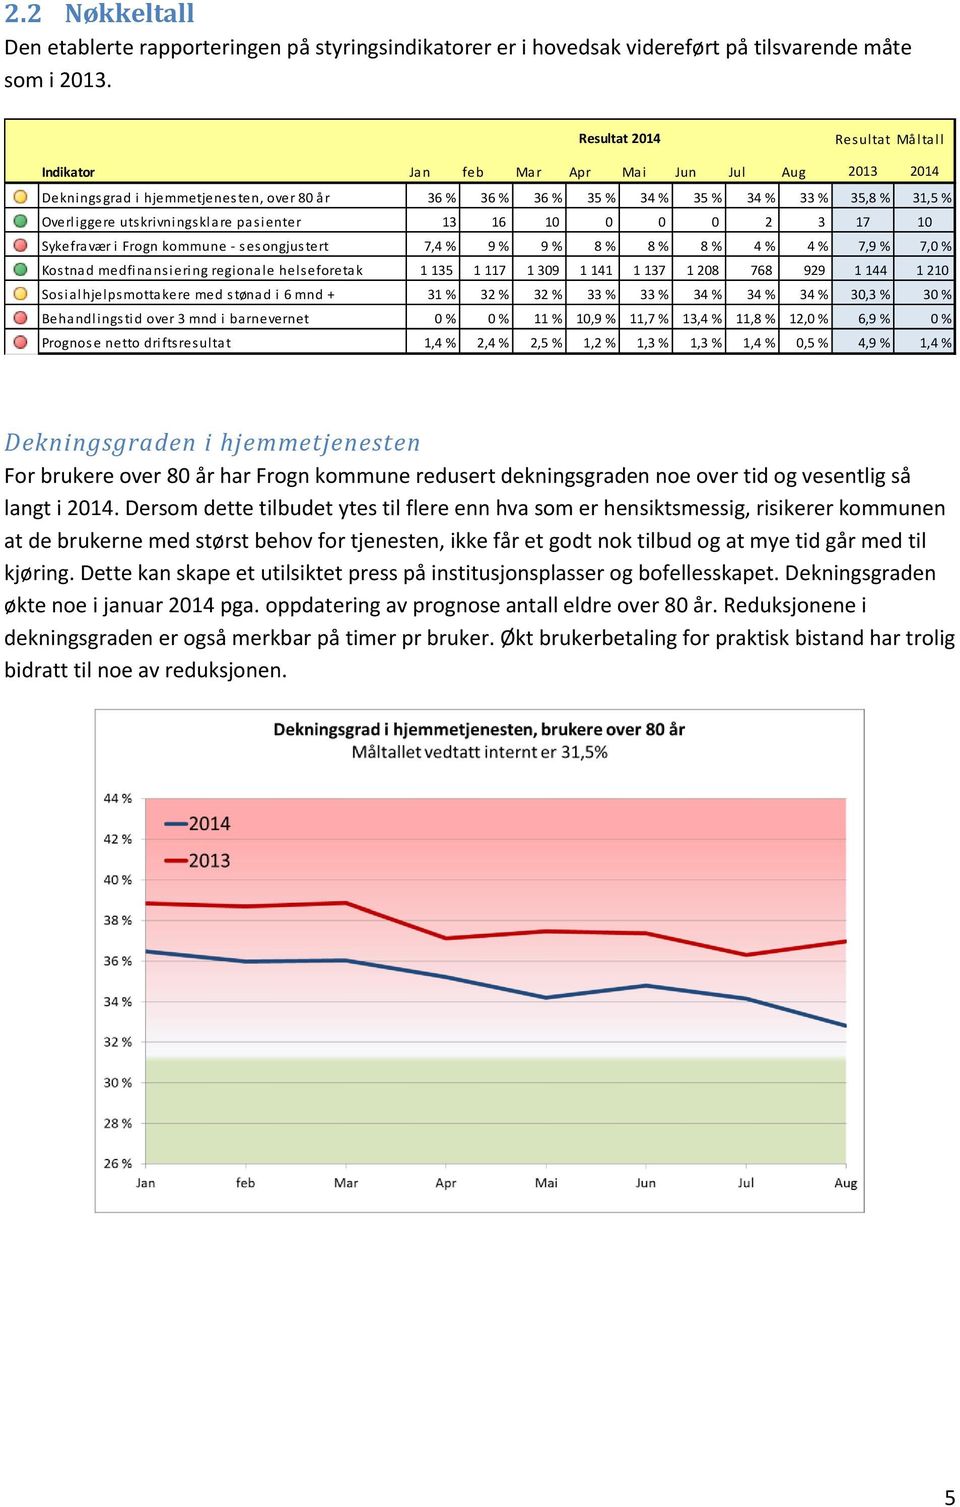 utskrivningsklare pasienter 13 16 10 0 0 0 2 3 17 10 Sykefravær i Frogn kommune - sesongjustert 7,4 % 9 % 9 % 8 % 8 % 8 % 4 % 4 % 7,9 % 7,0 % Kostnad medfinansiering regionale helseforetak 1 135 1